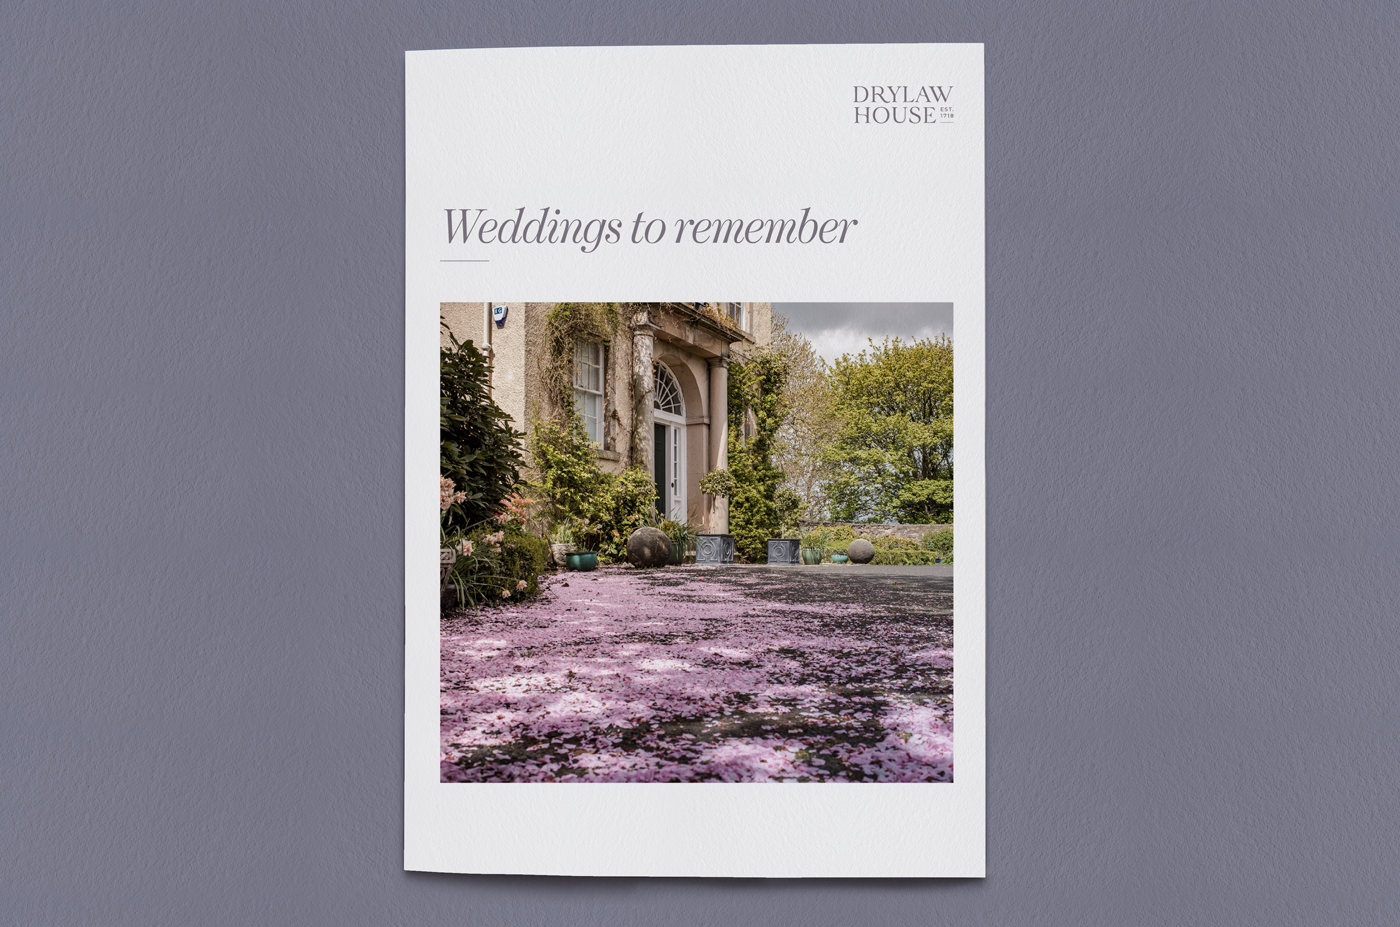 Drylaw House weddings brochure cover